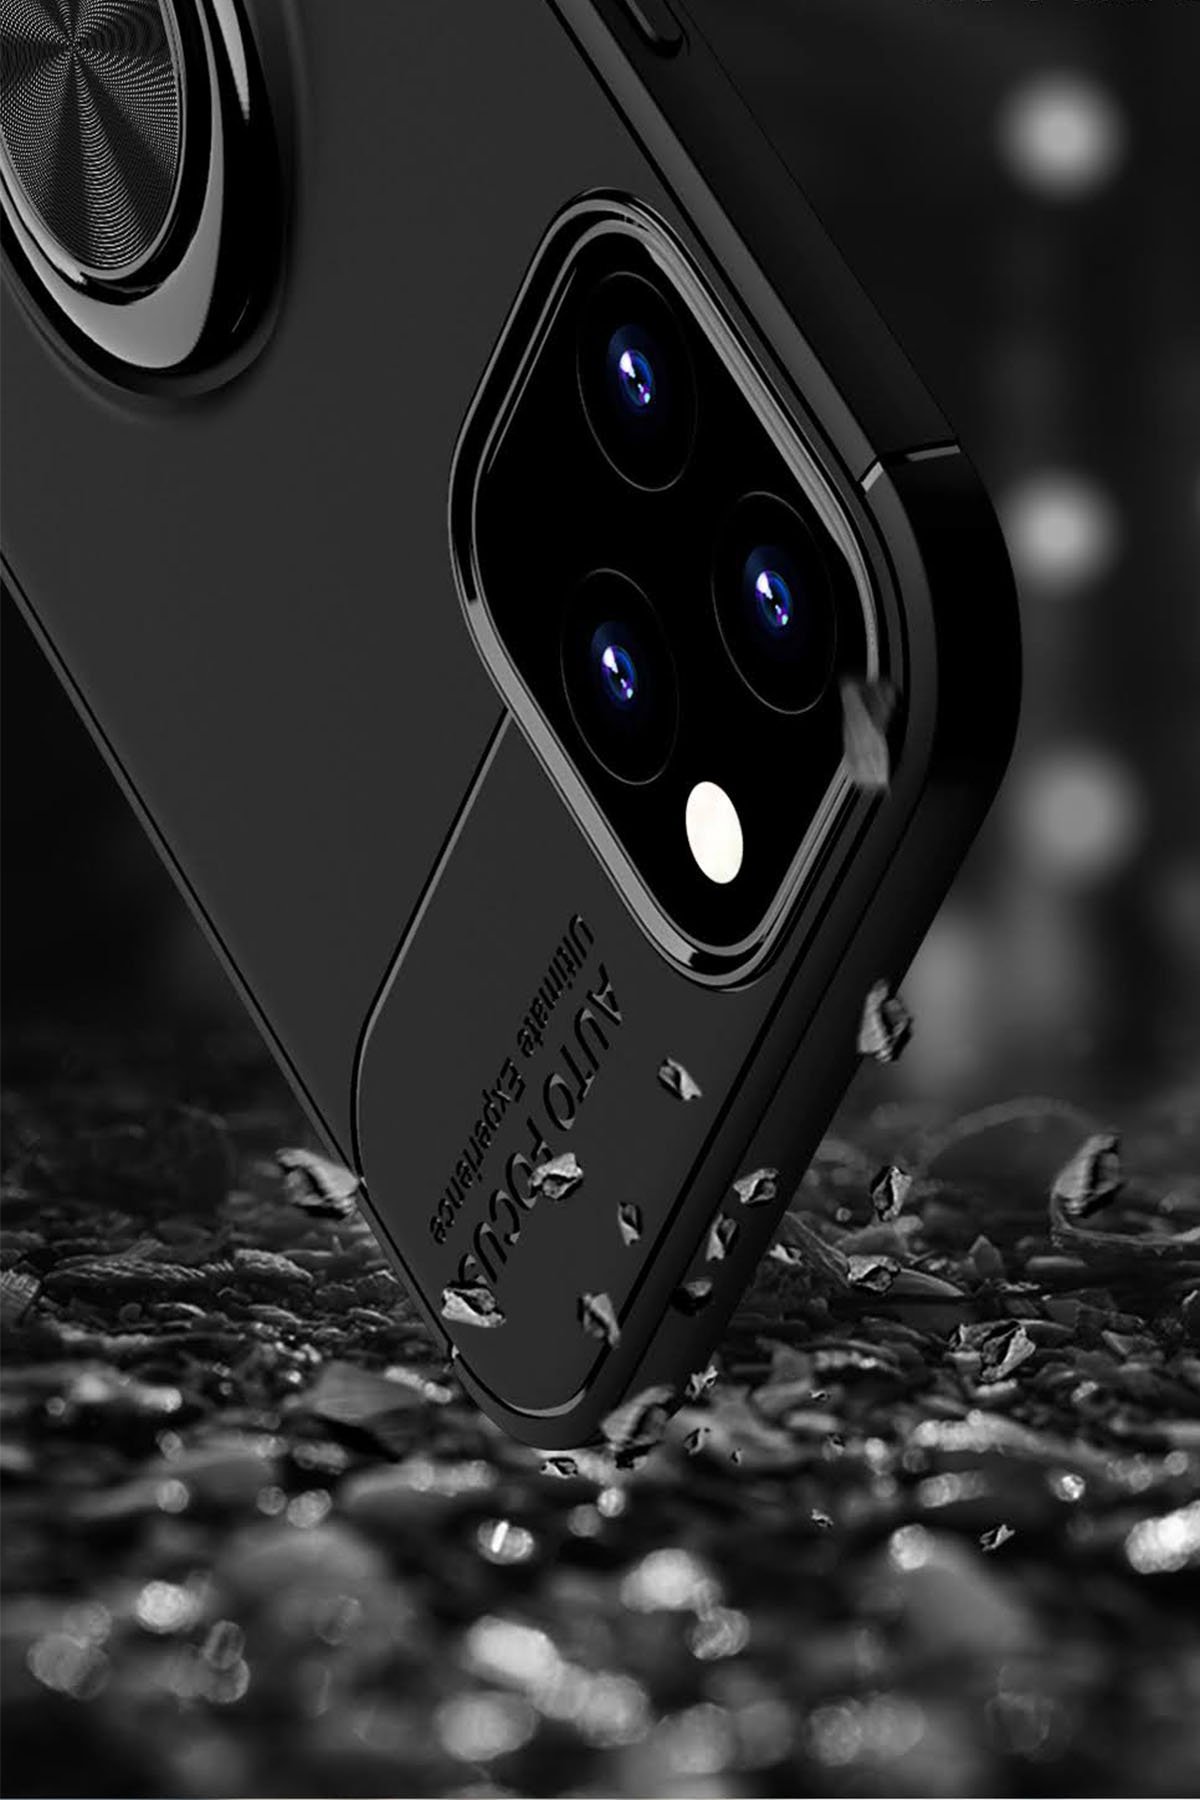 Newface iPhone 12 Pro Kılıf Jack Magneticsafe Lens Silikon - Yeşil